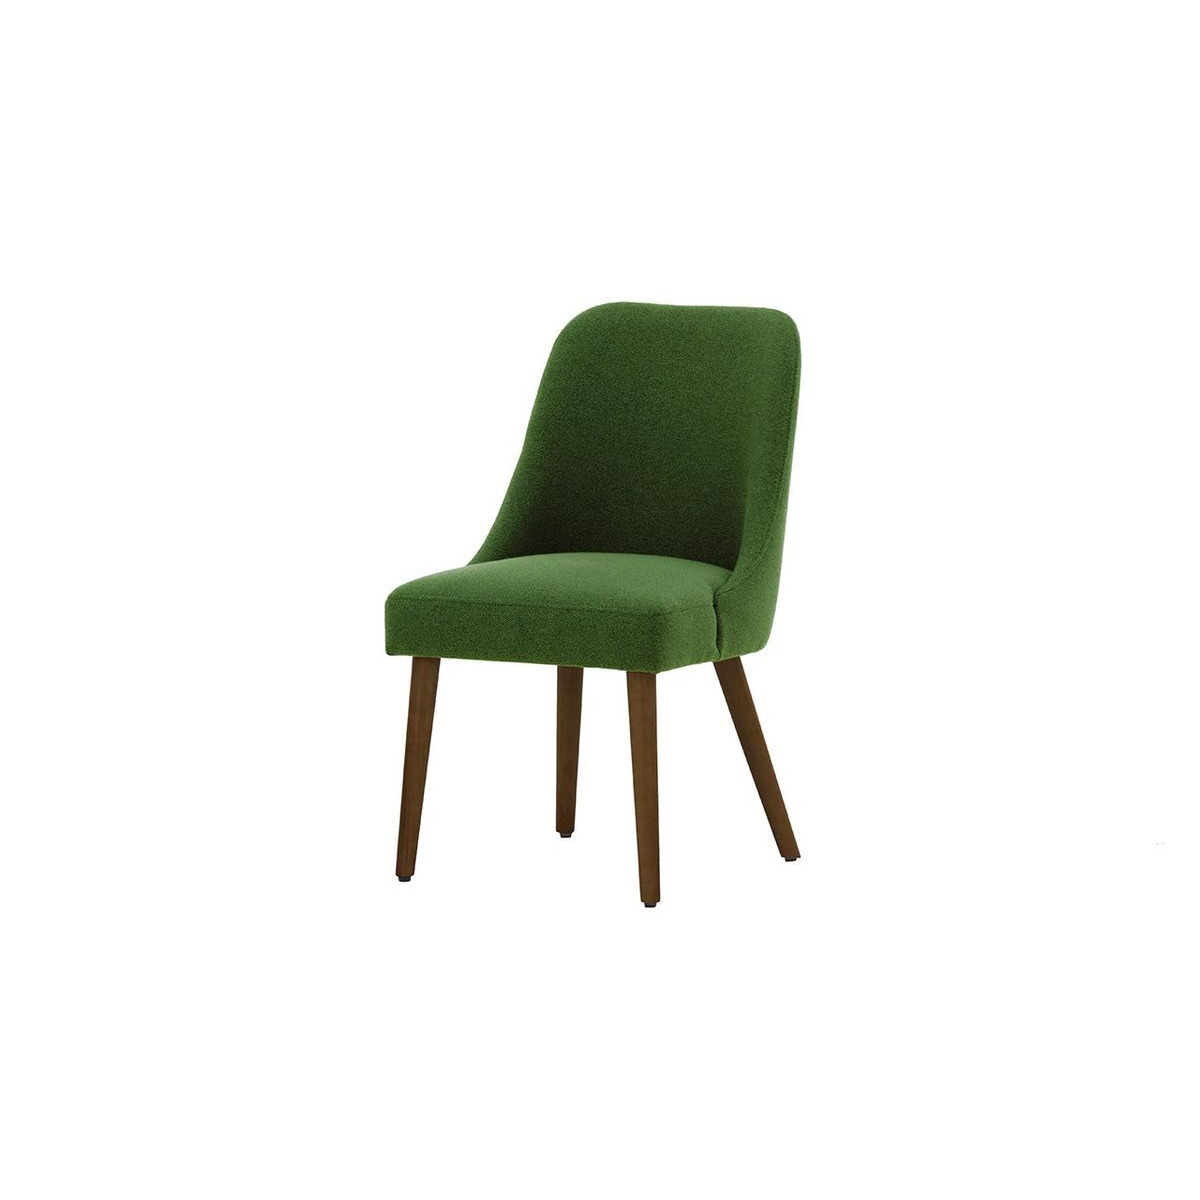 Albion Dining Chair, green, Leg colour: dark oak - image 1